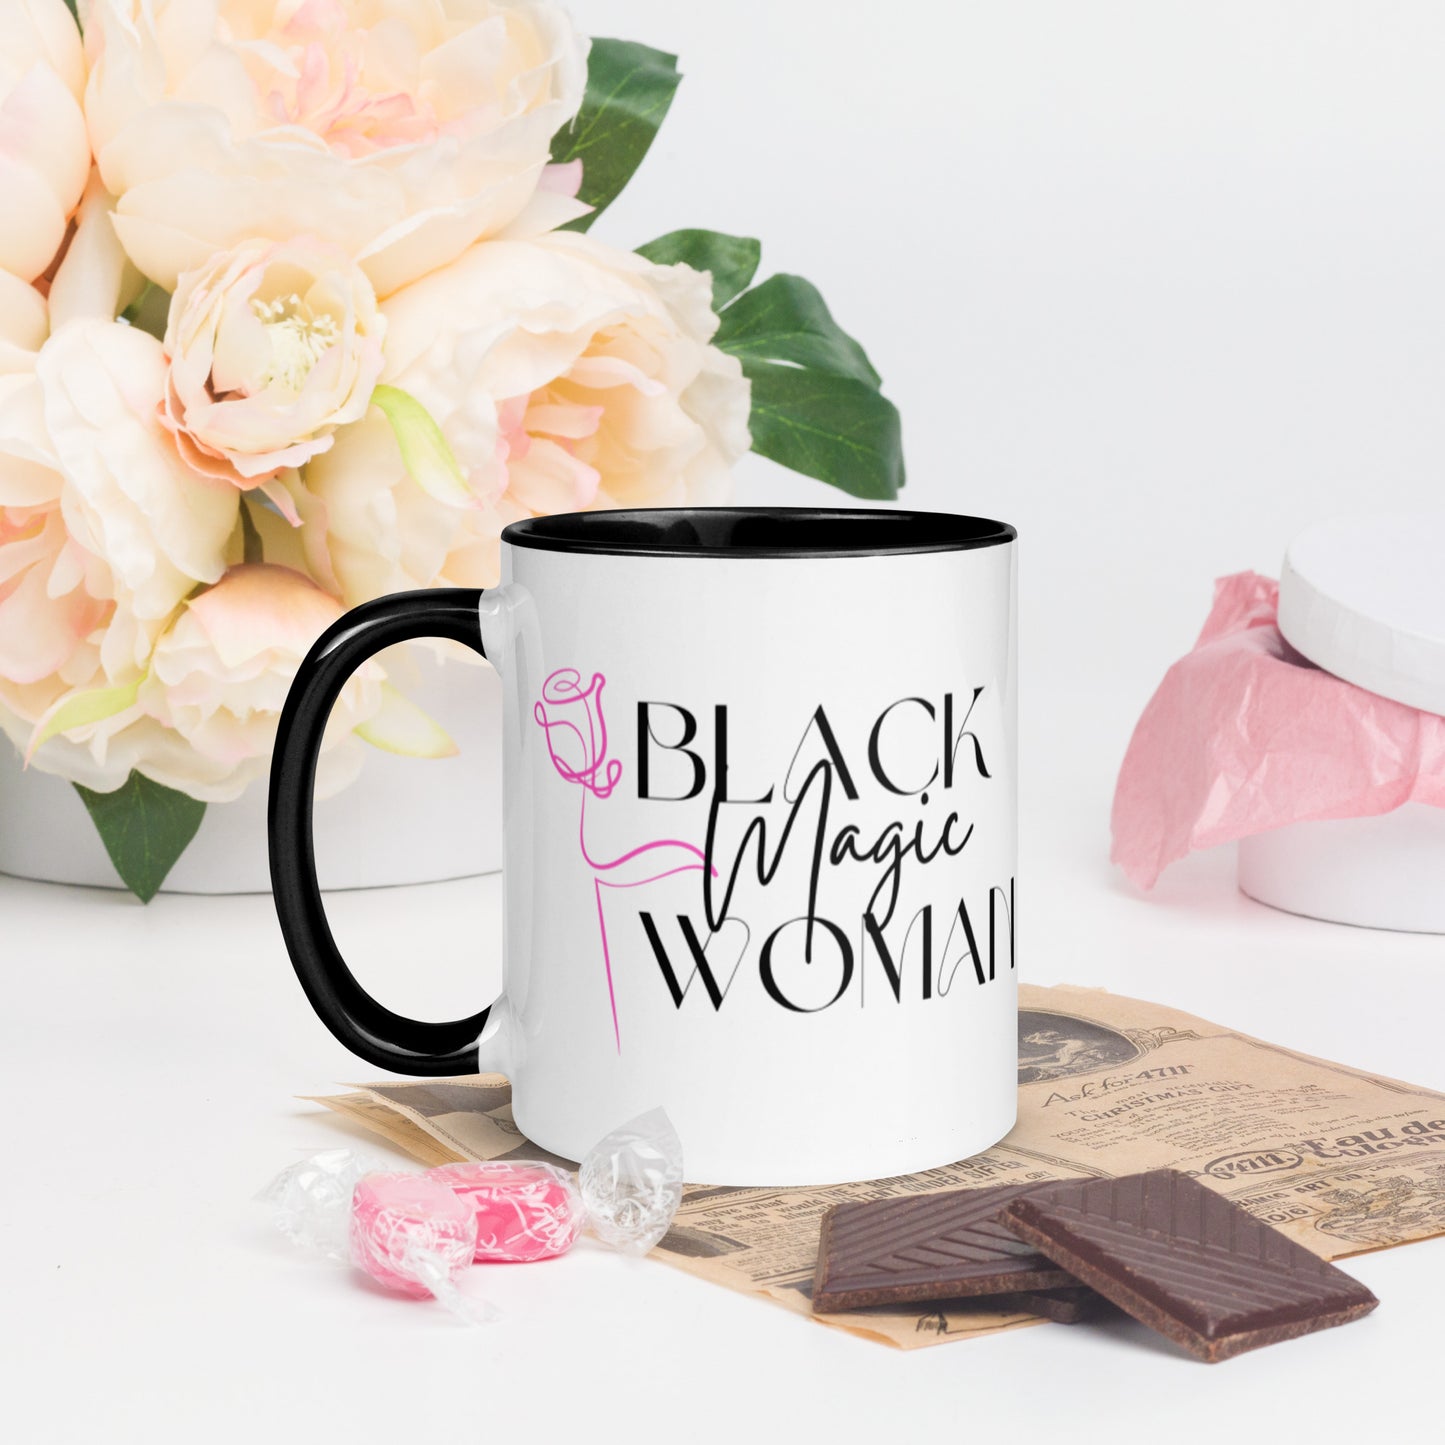 Mug: Black Magic Woman (pink rose)